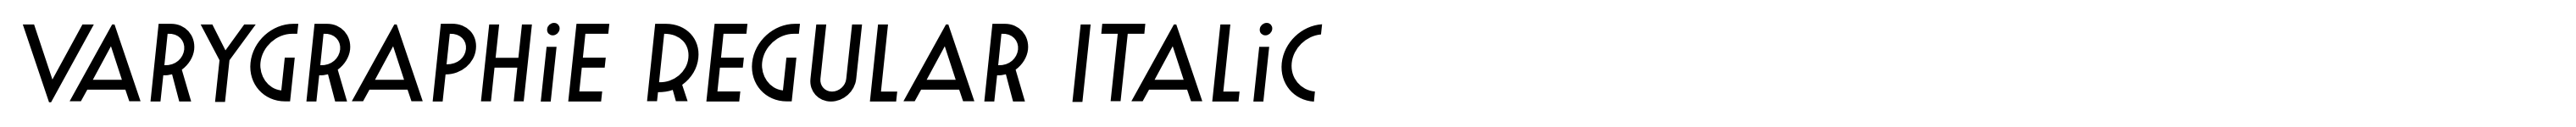 Varygraphie Regular Italic